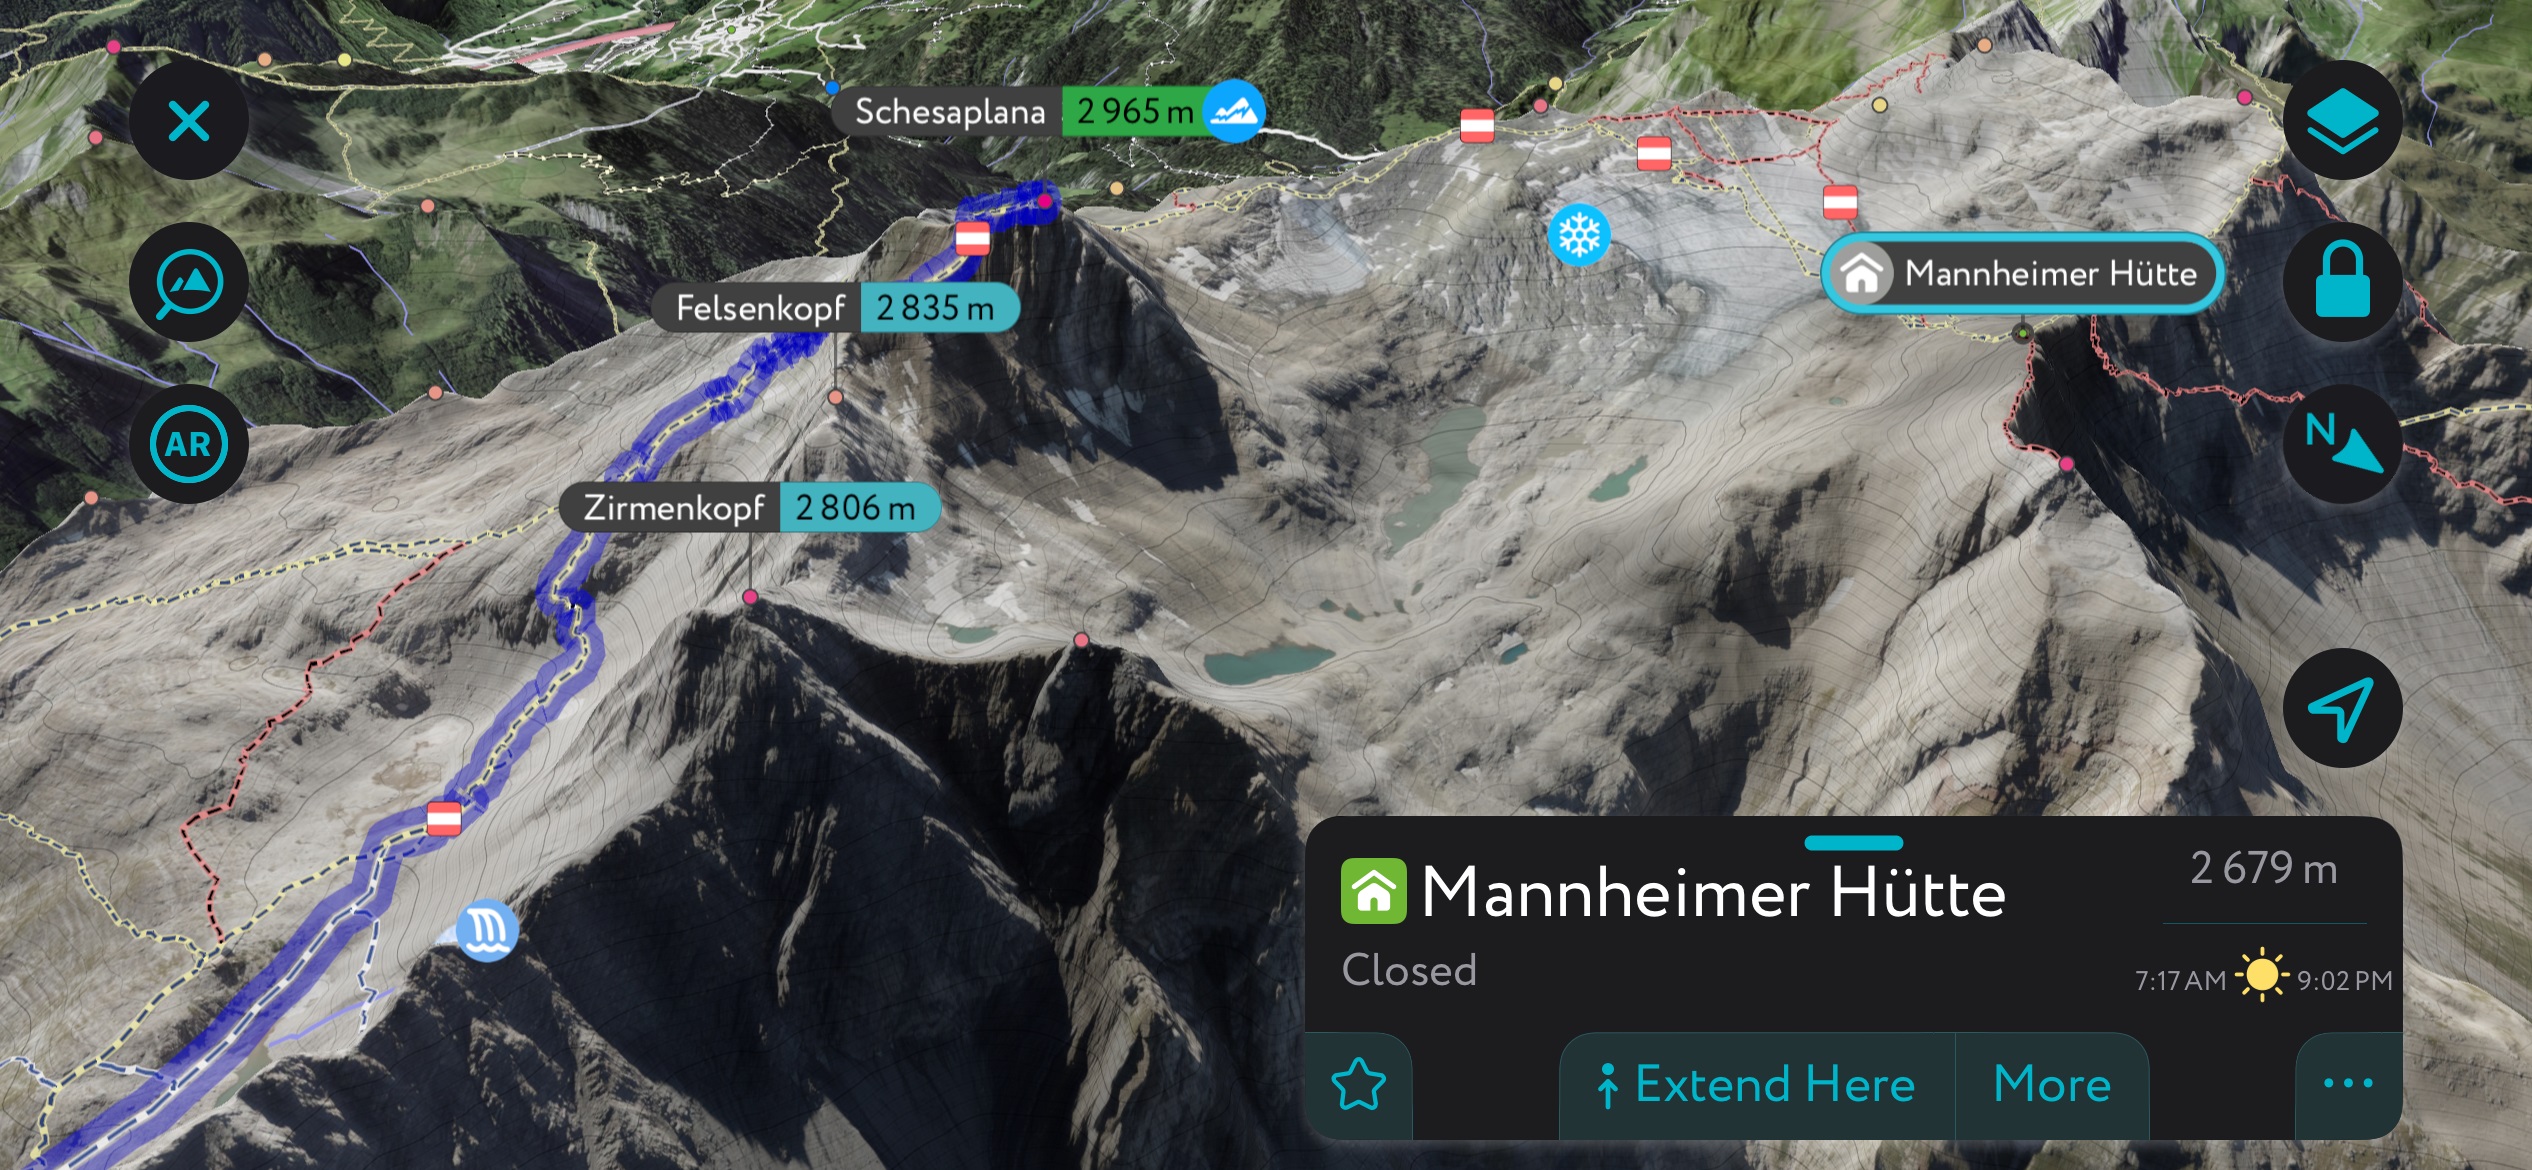 The Mannheimer on the PeakVisor App. Climbing Schesaplana